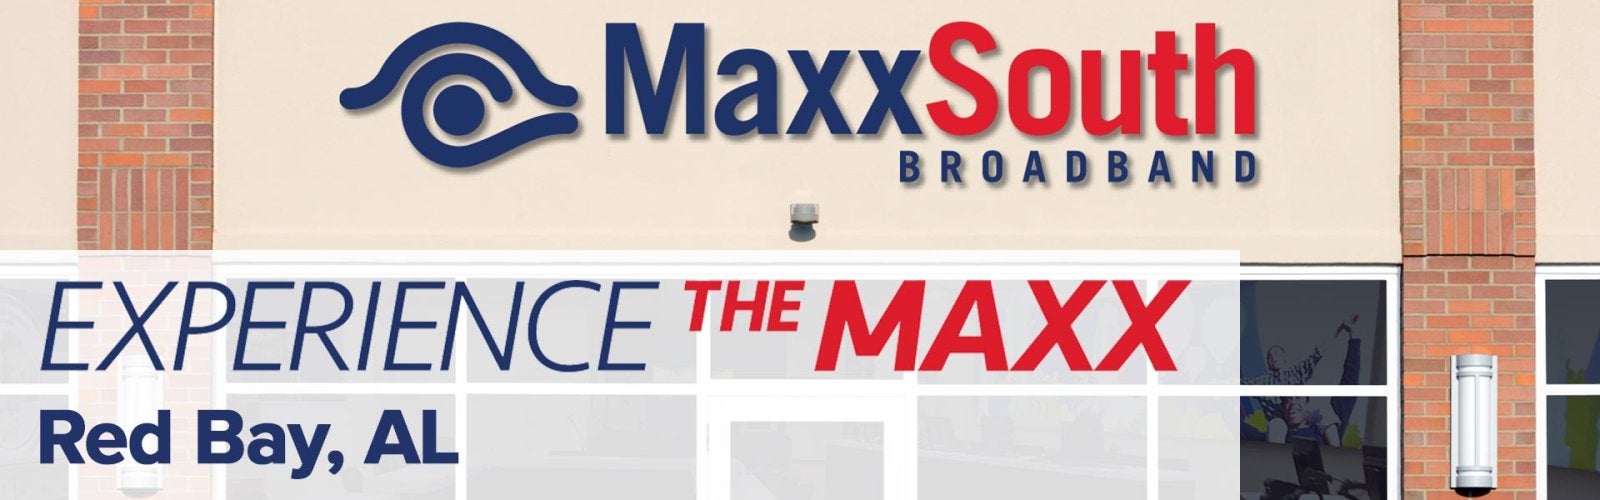 maxxsouth store near me, maxxsouth red bay store, red bay, maxxsouth support